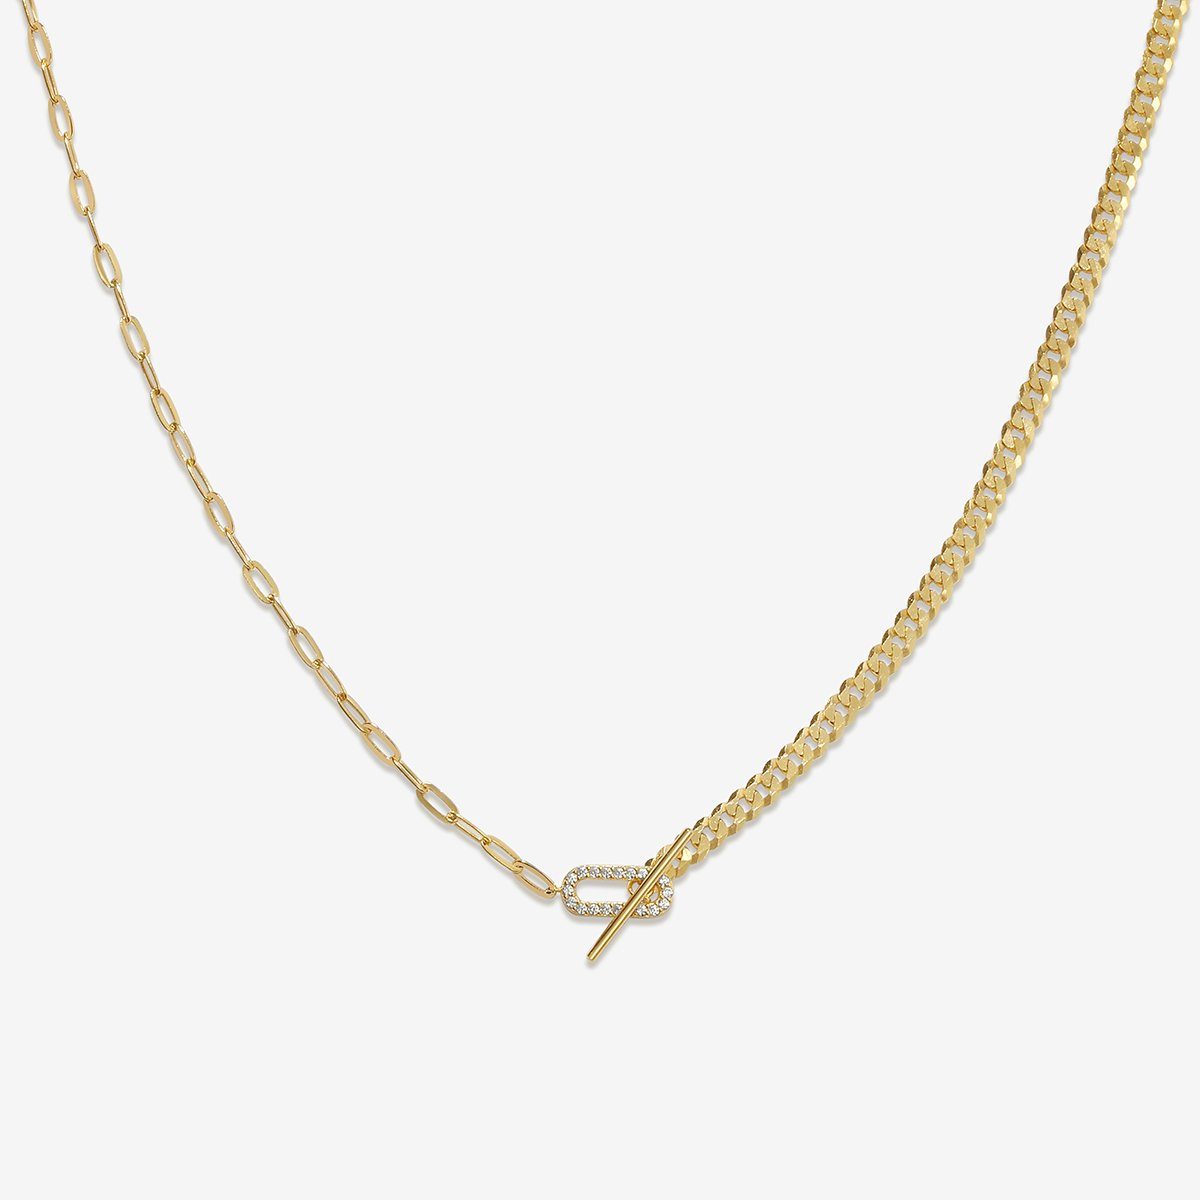 Ijea Chain Necklace